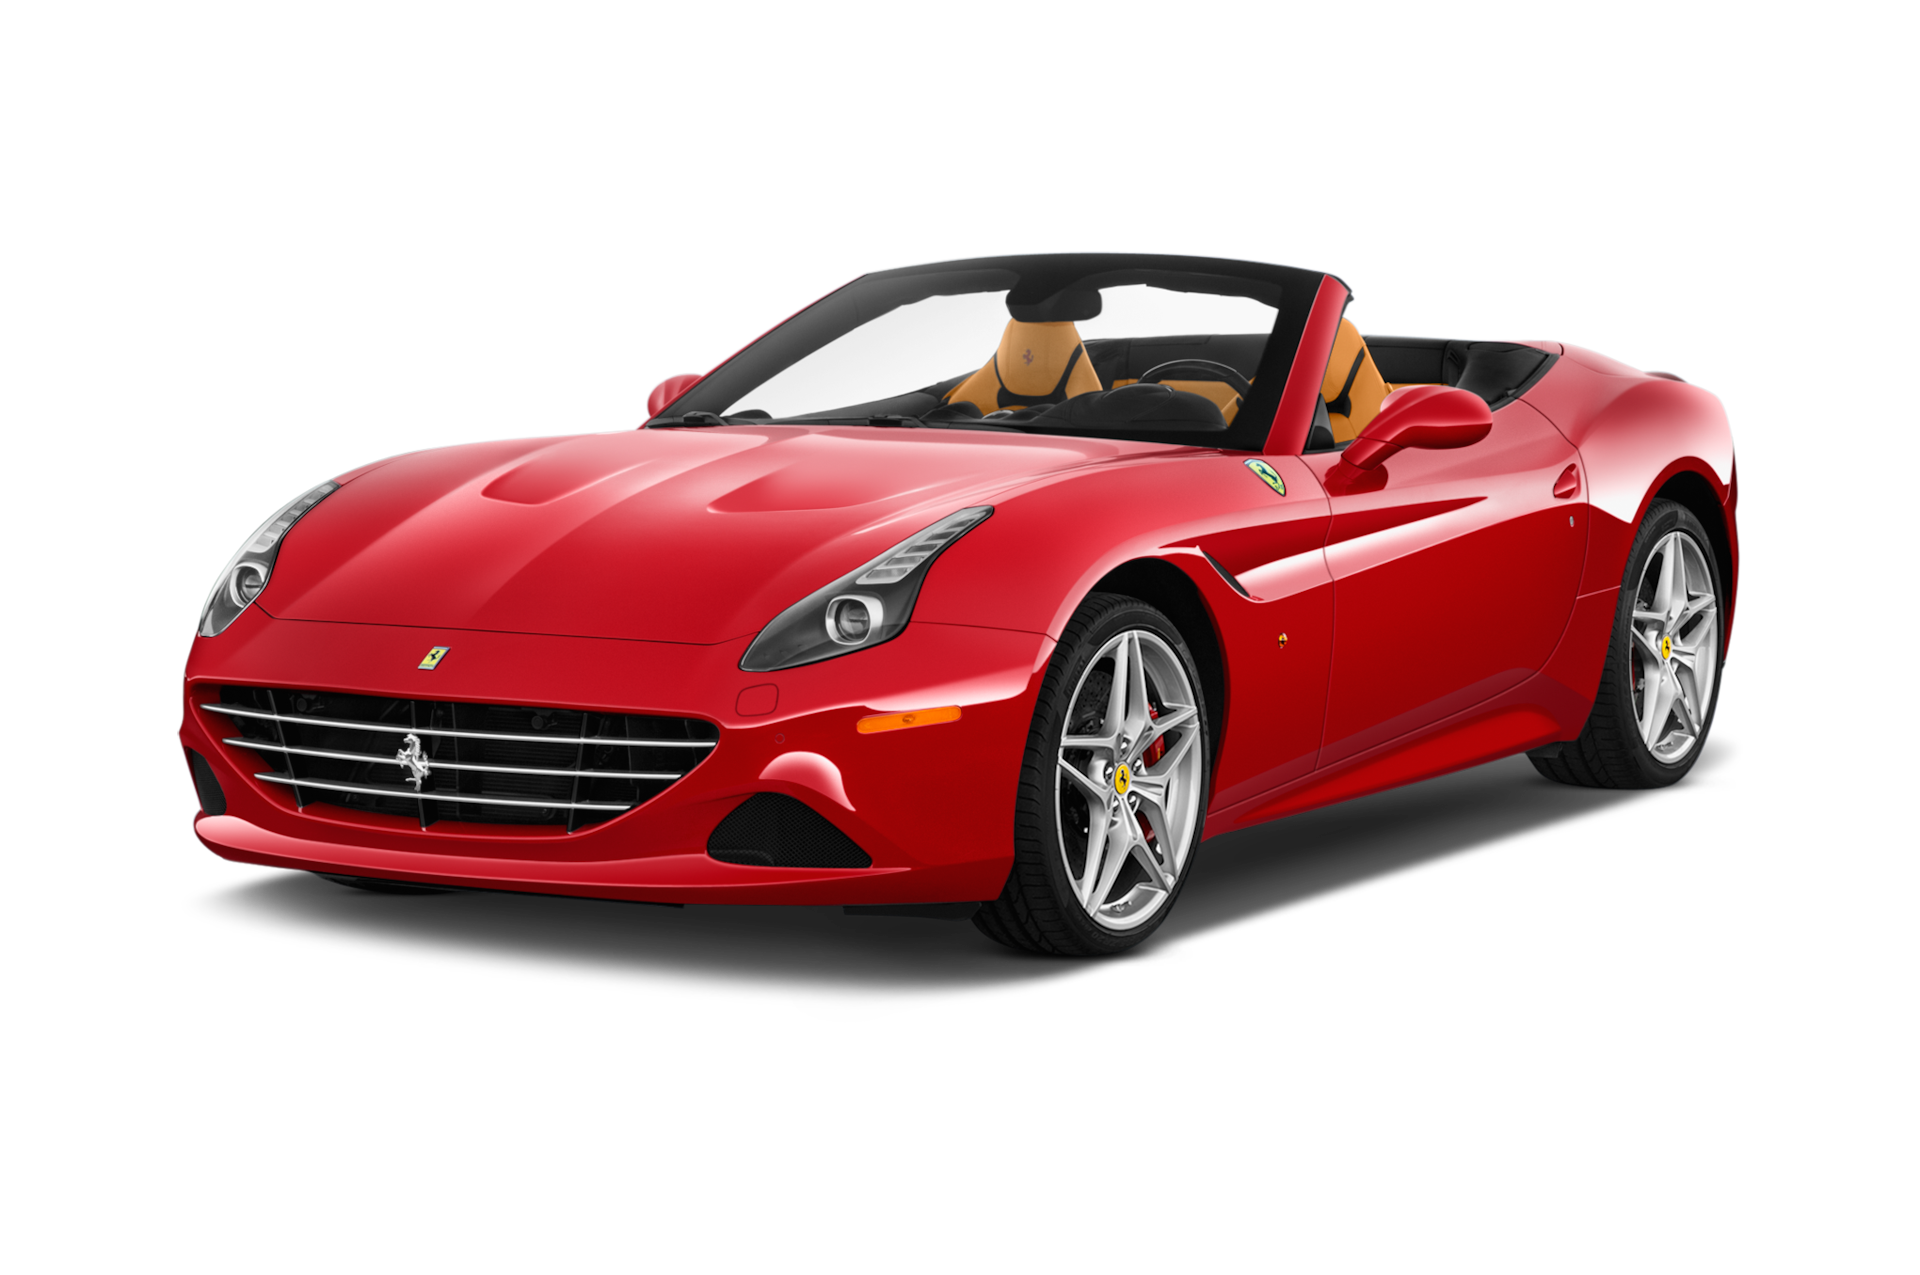 2016 Ferrari California T Prices, Reviews, and Photos - MotorTrend